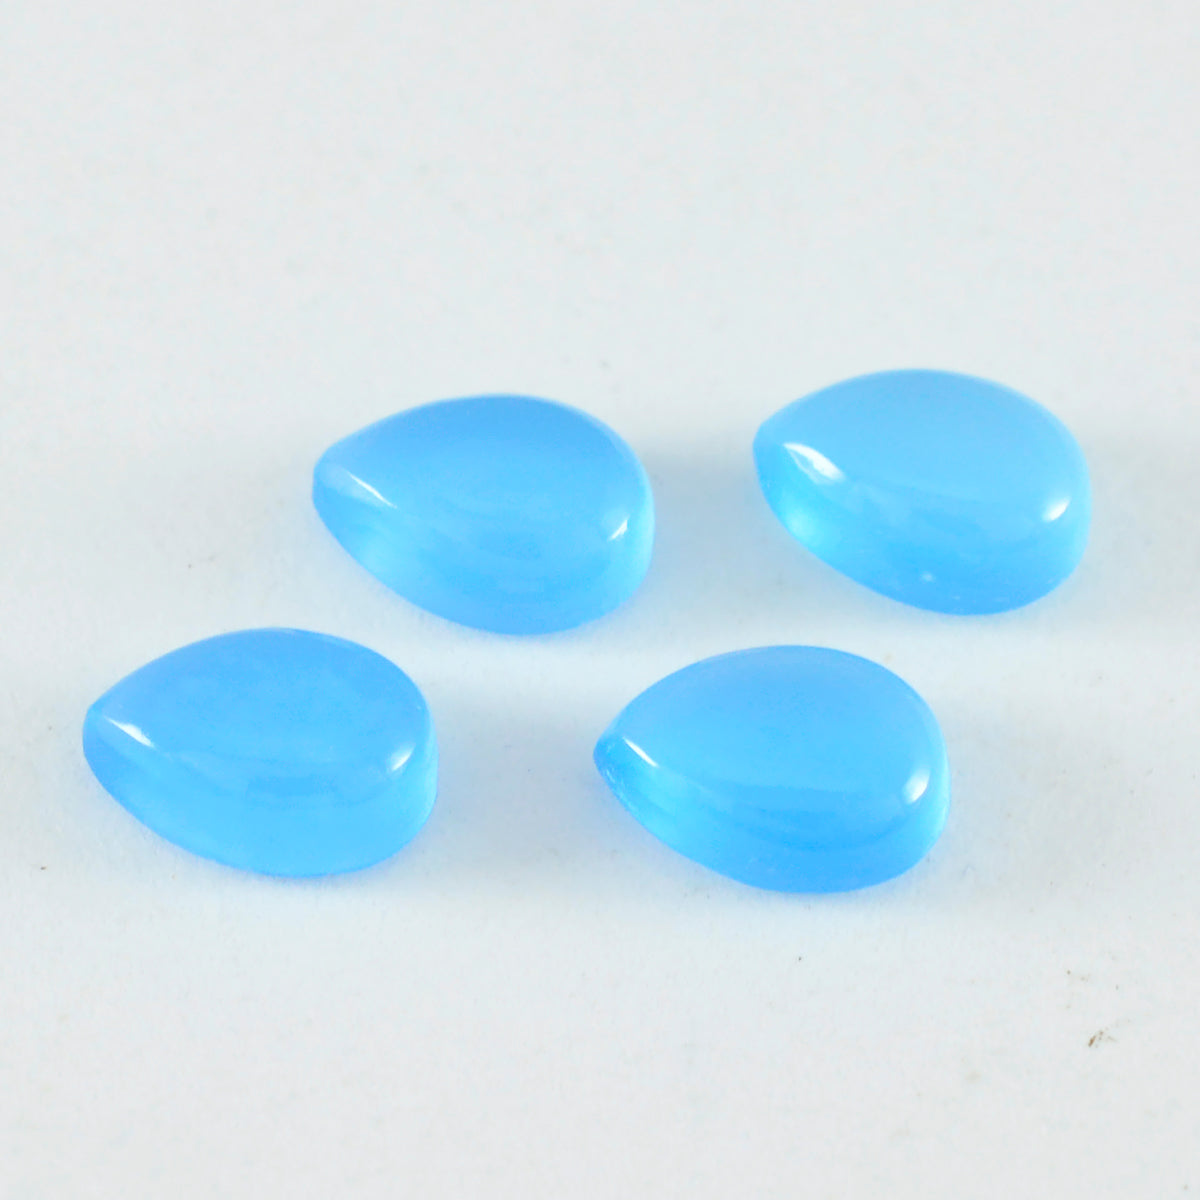 Riyogems 1PC Blue Chalcedony Cabochon 6x9 mm Pear Shape AAA Quality Loose Gems